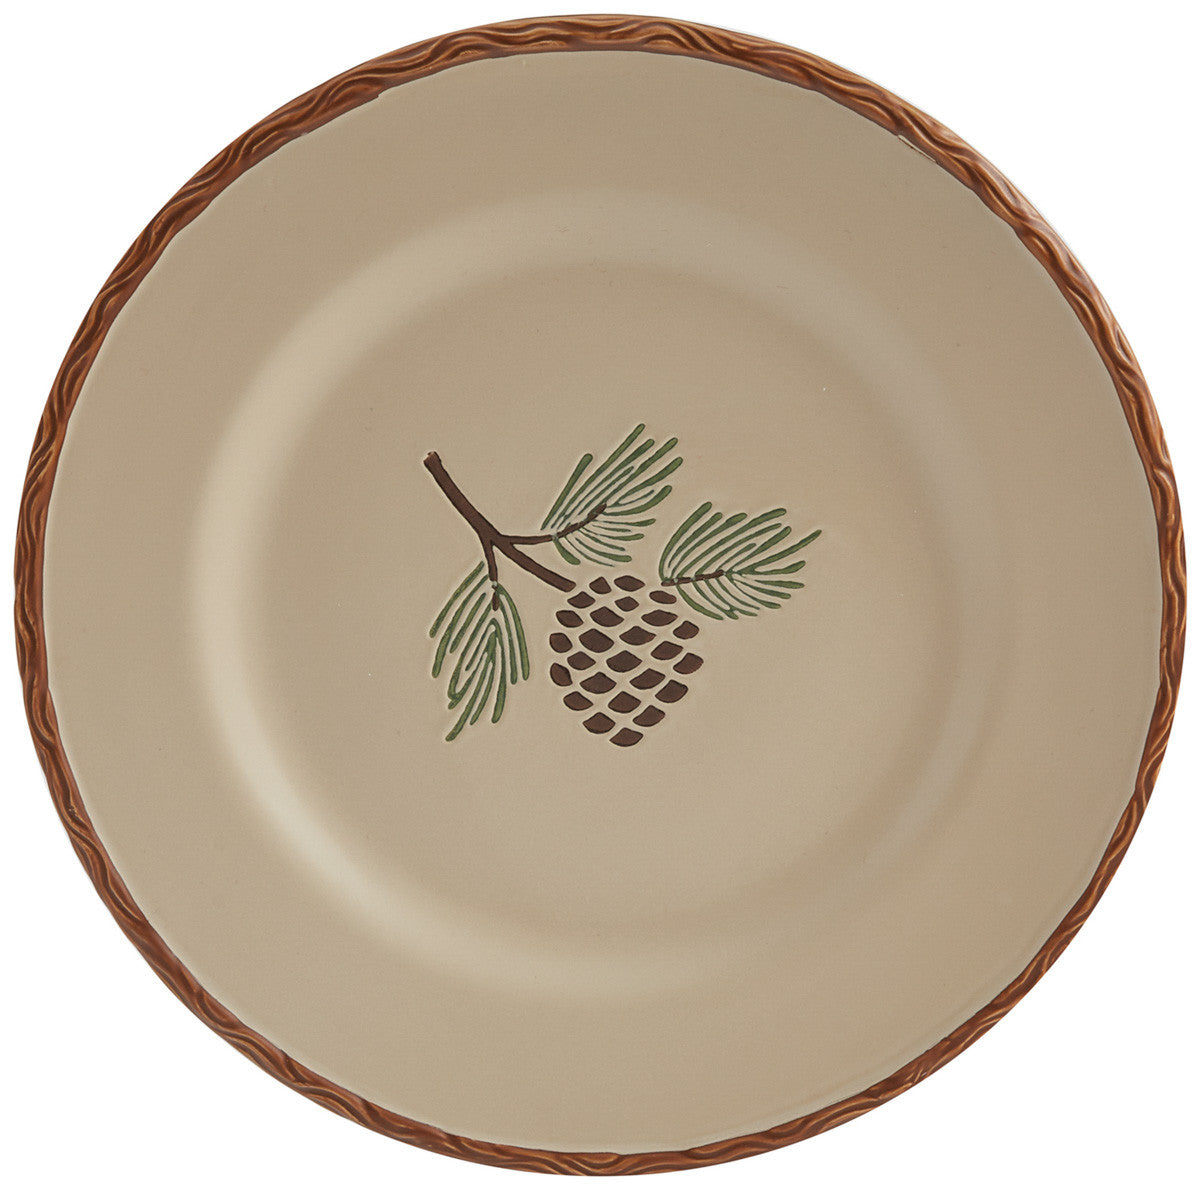 Pinecroft Dinner Plates - Set of 4 Park Designs